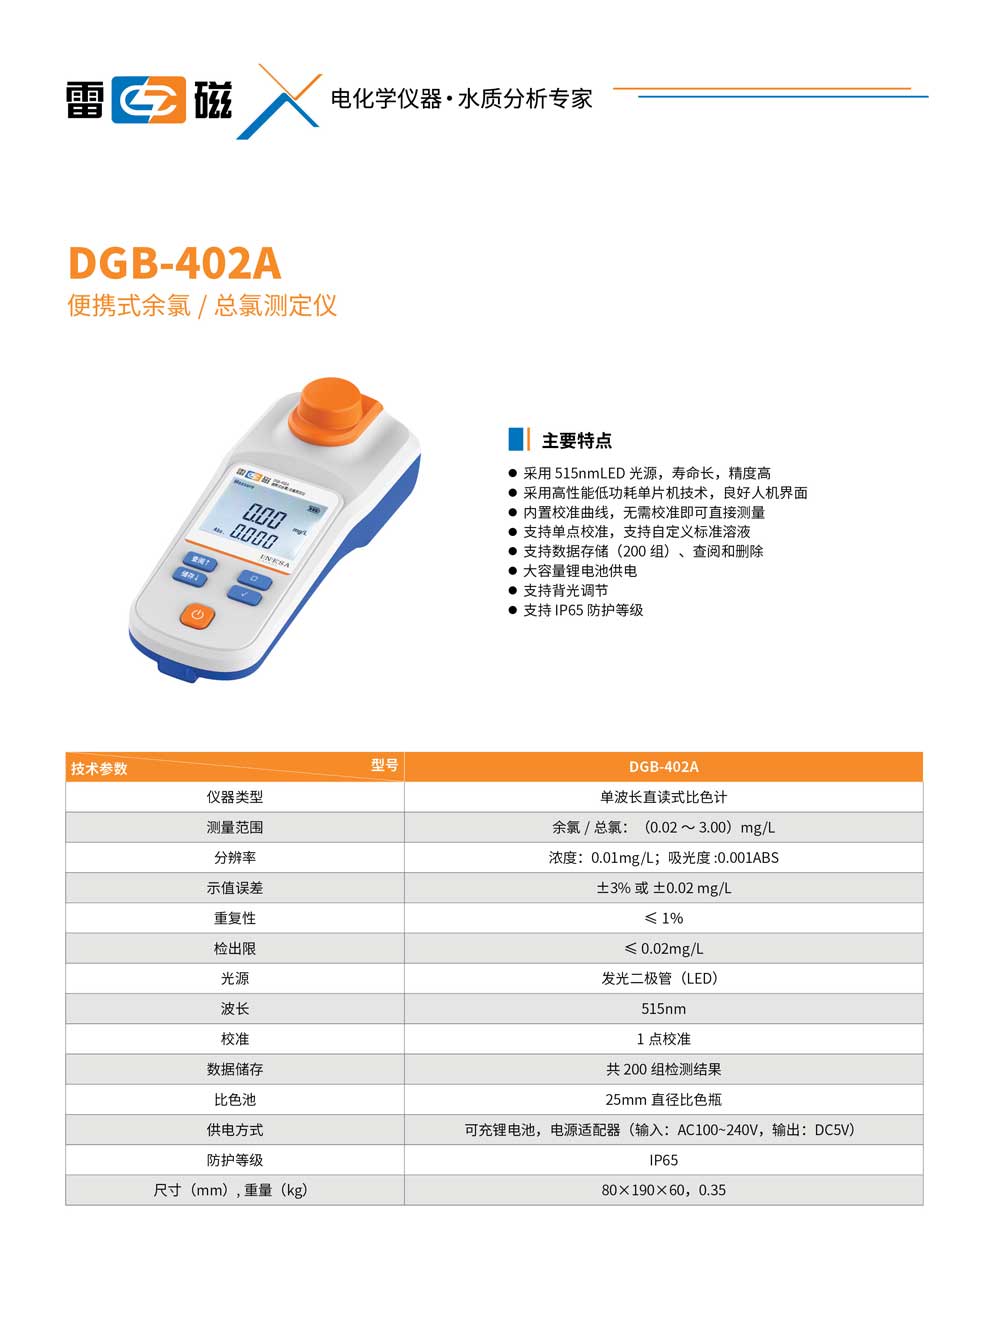 DGB-402A-彩页.jpg